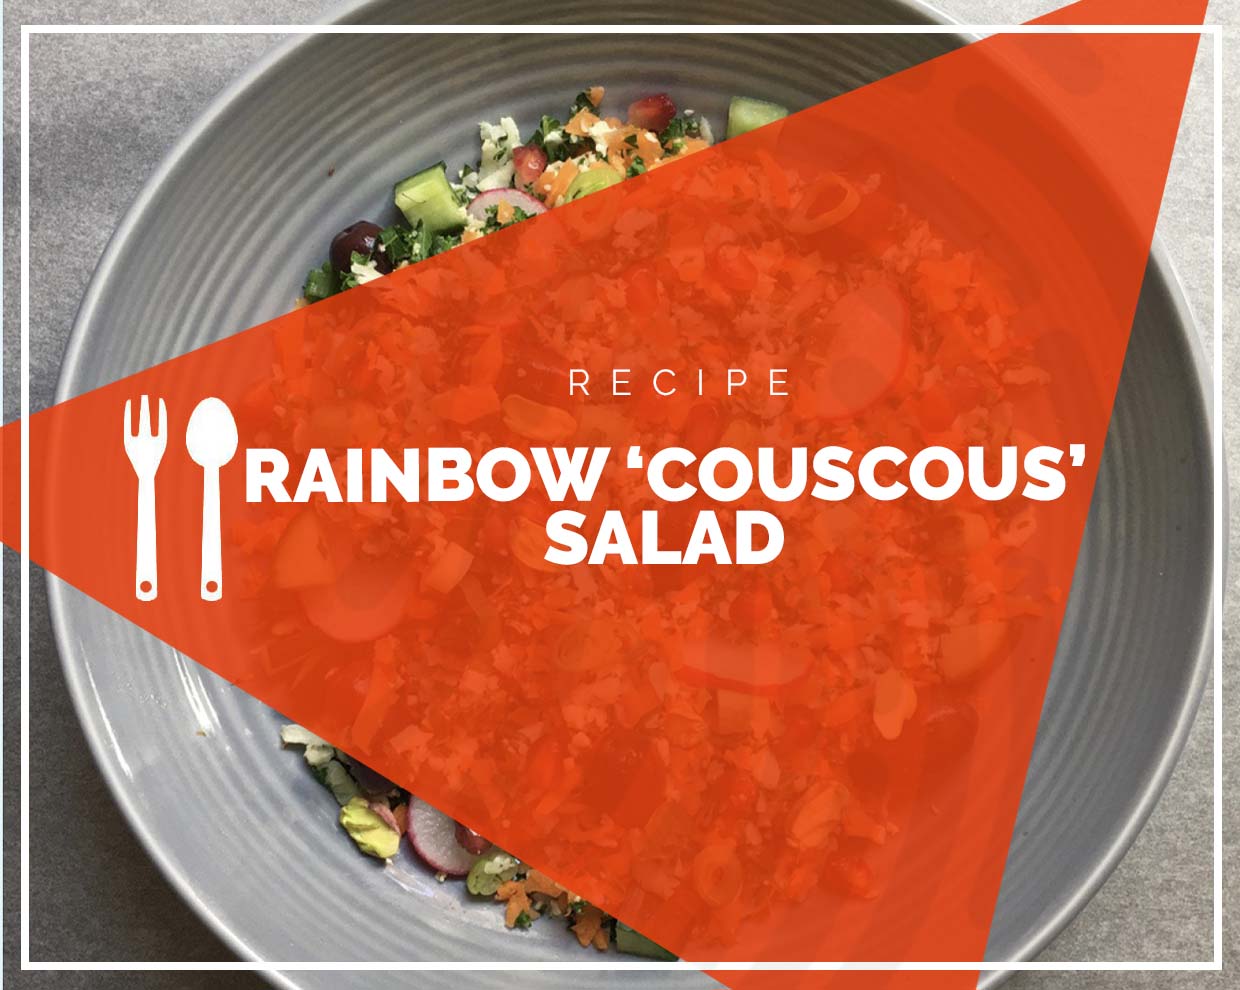 Rainbow 'couscous' salad